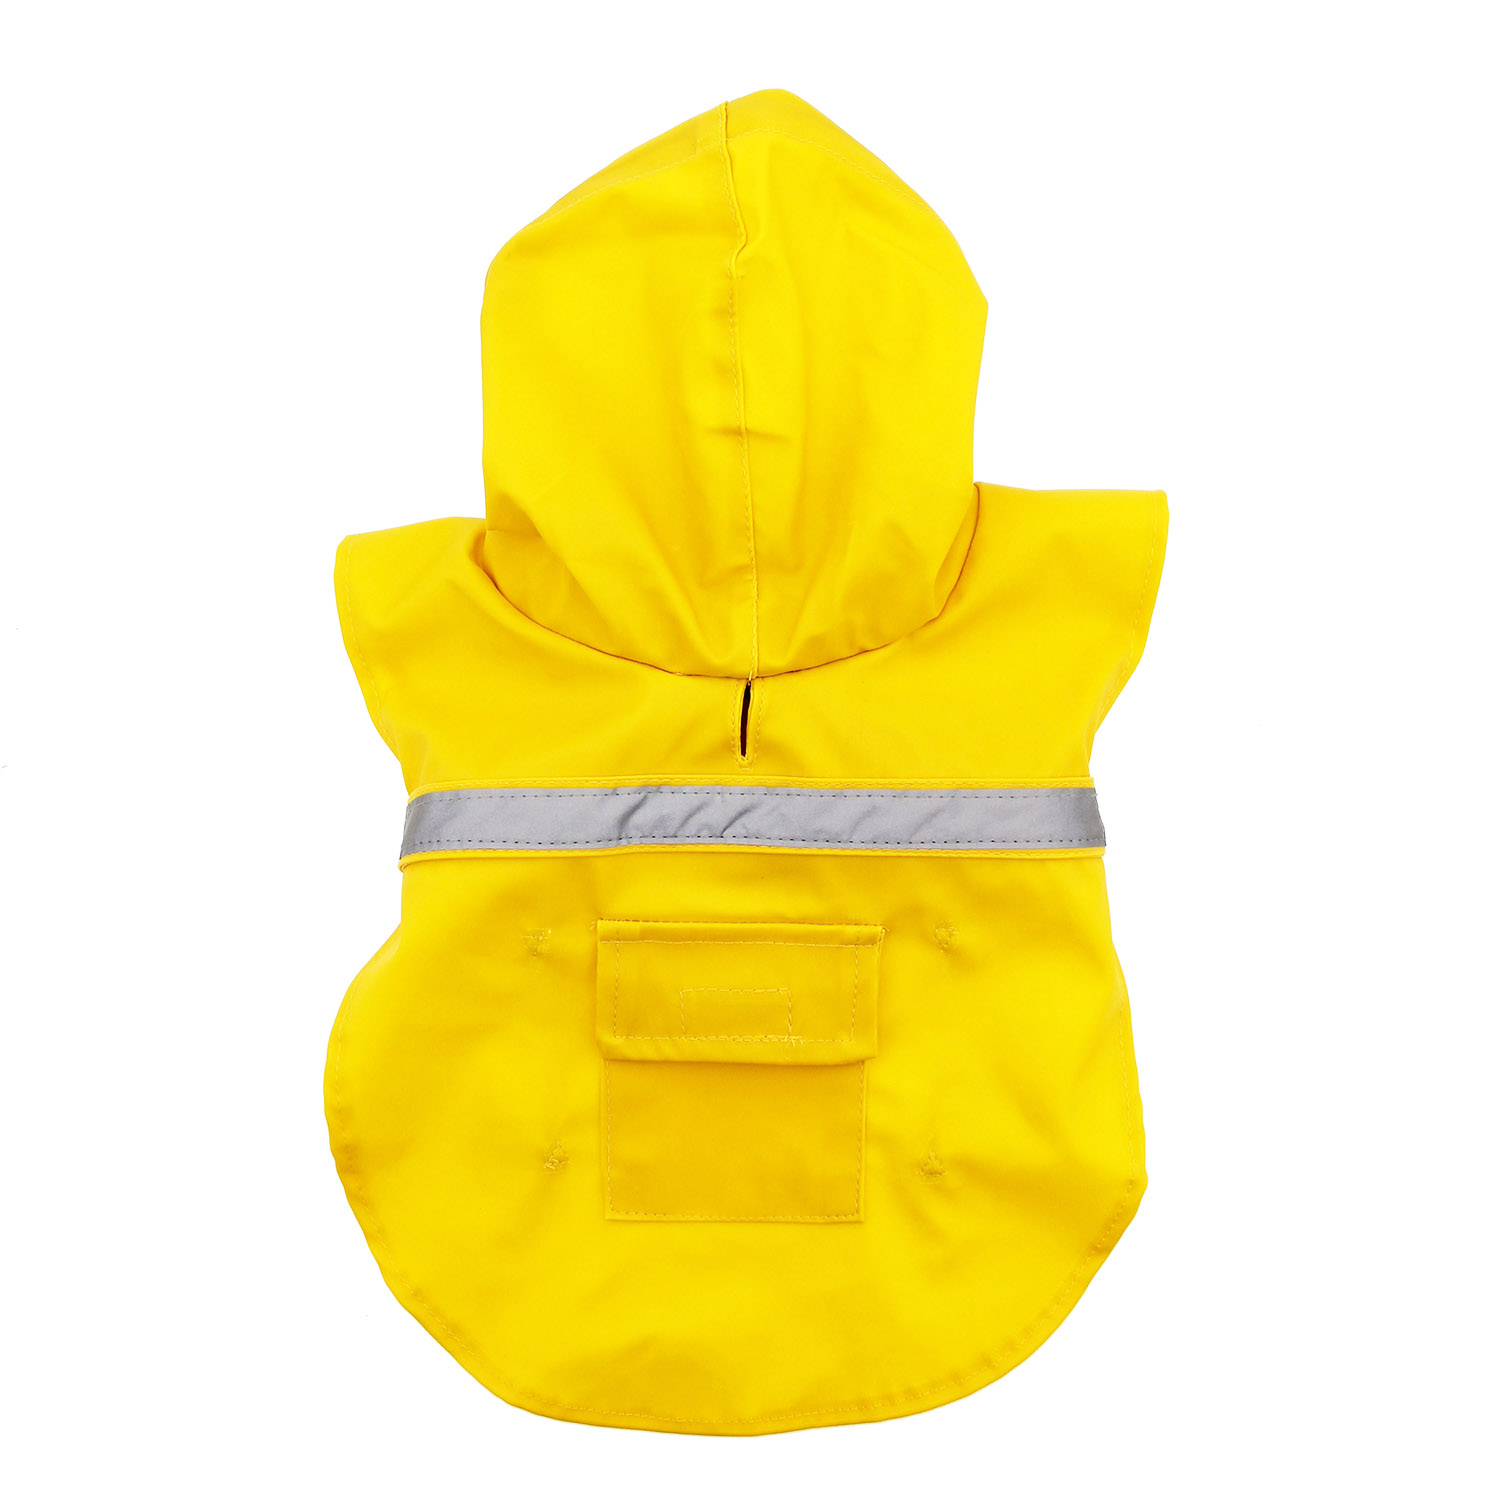 Guardian Gear Dog Rain Jacket with Reflective Strip - Yellow